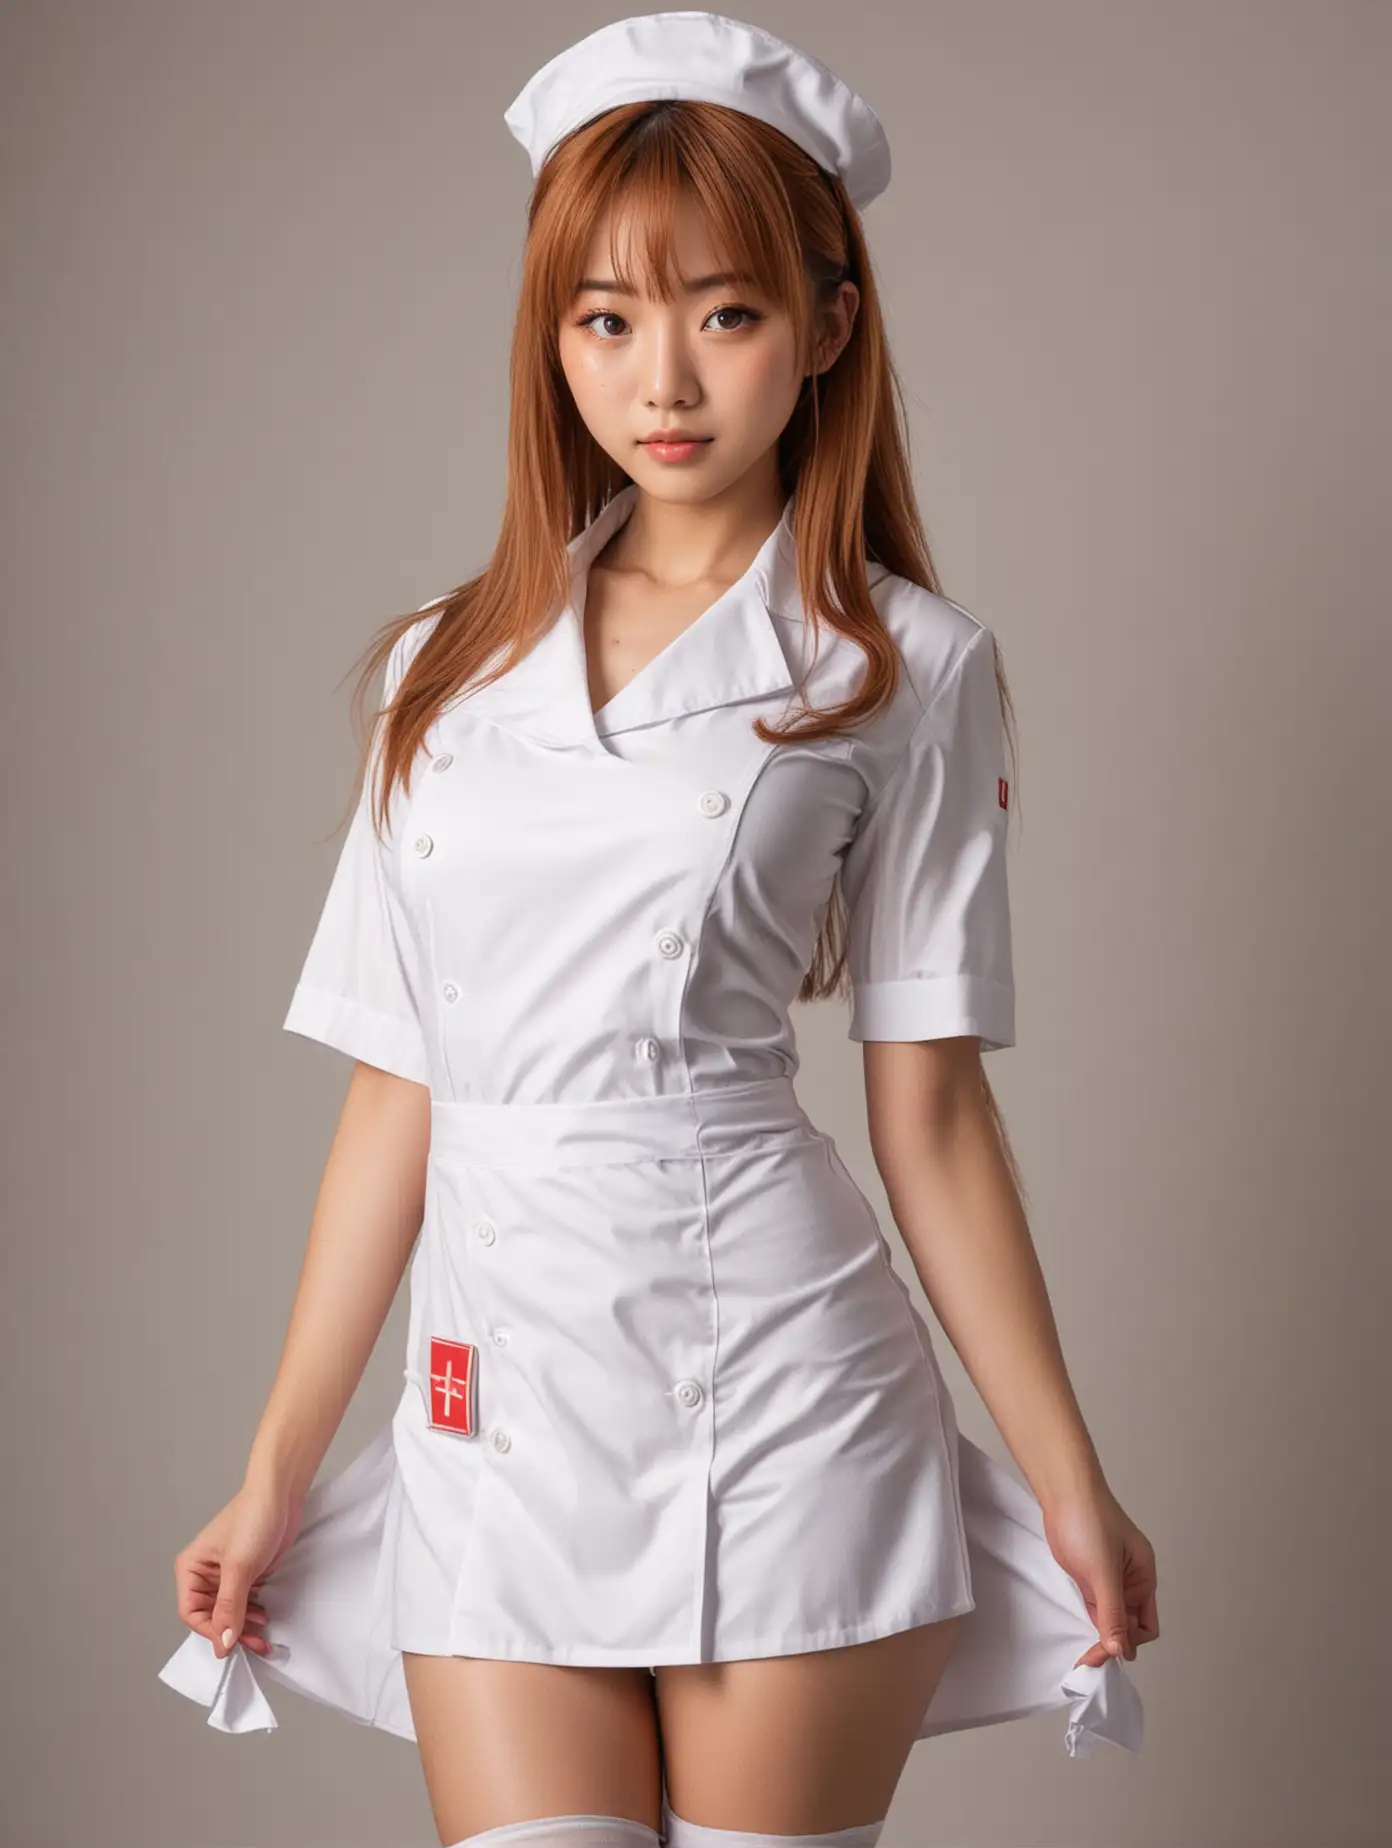 Seductive Nurse Cosplay Japanese Girl with Caramel Hair and Amber Eyes